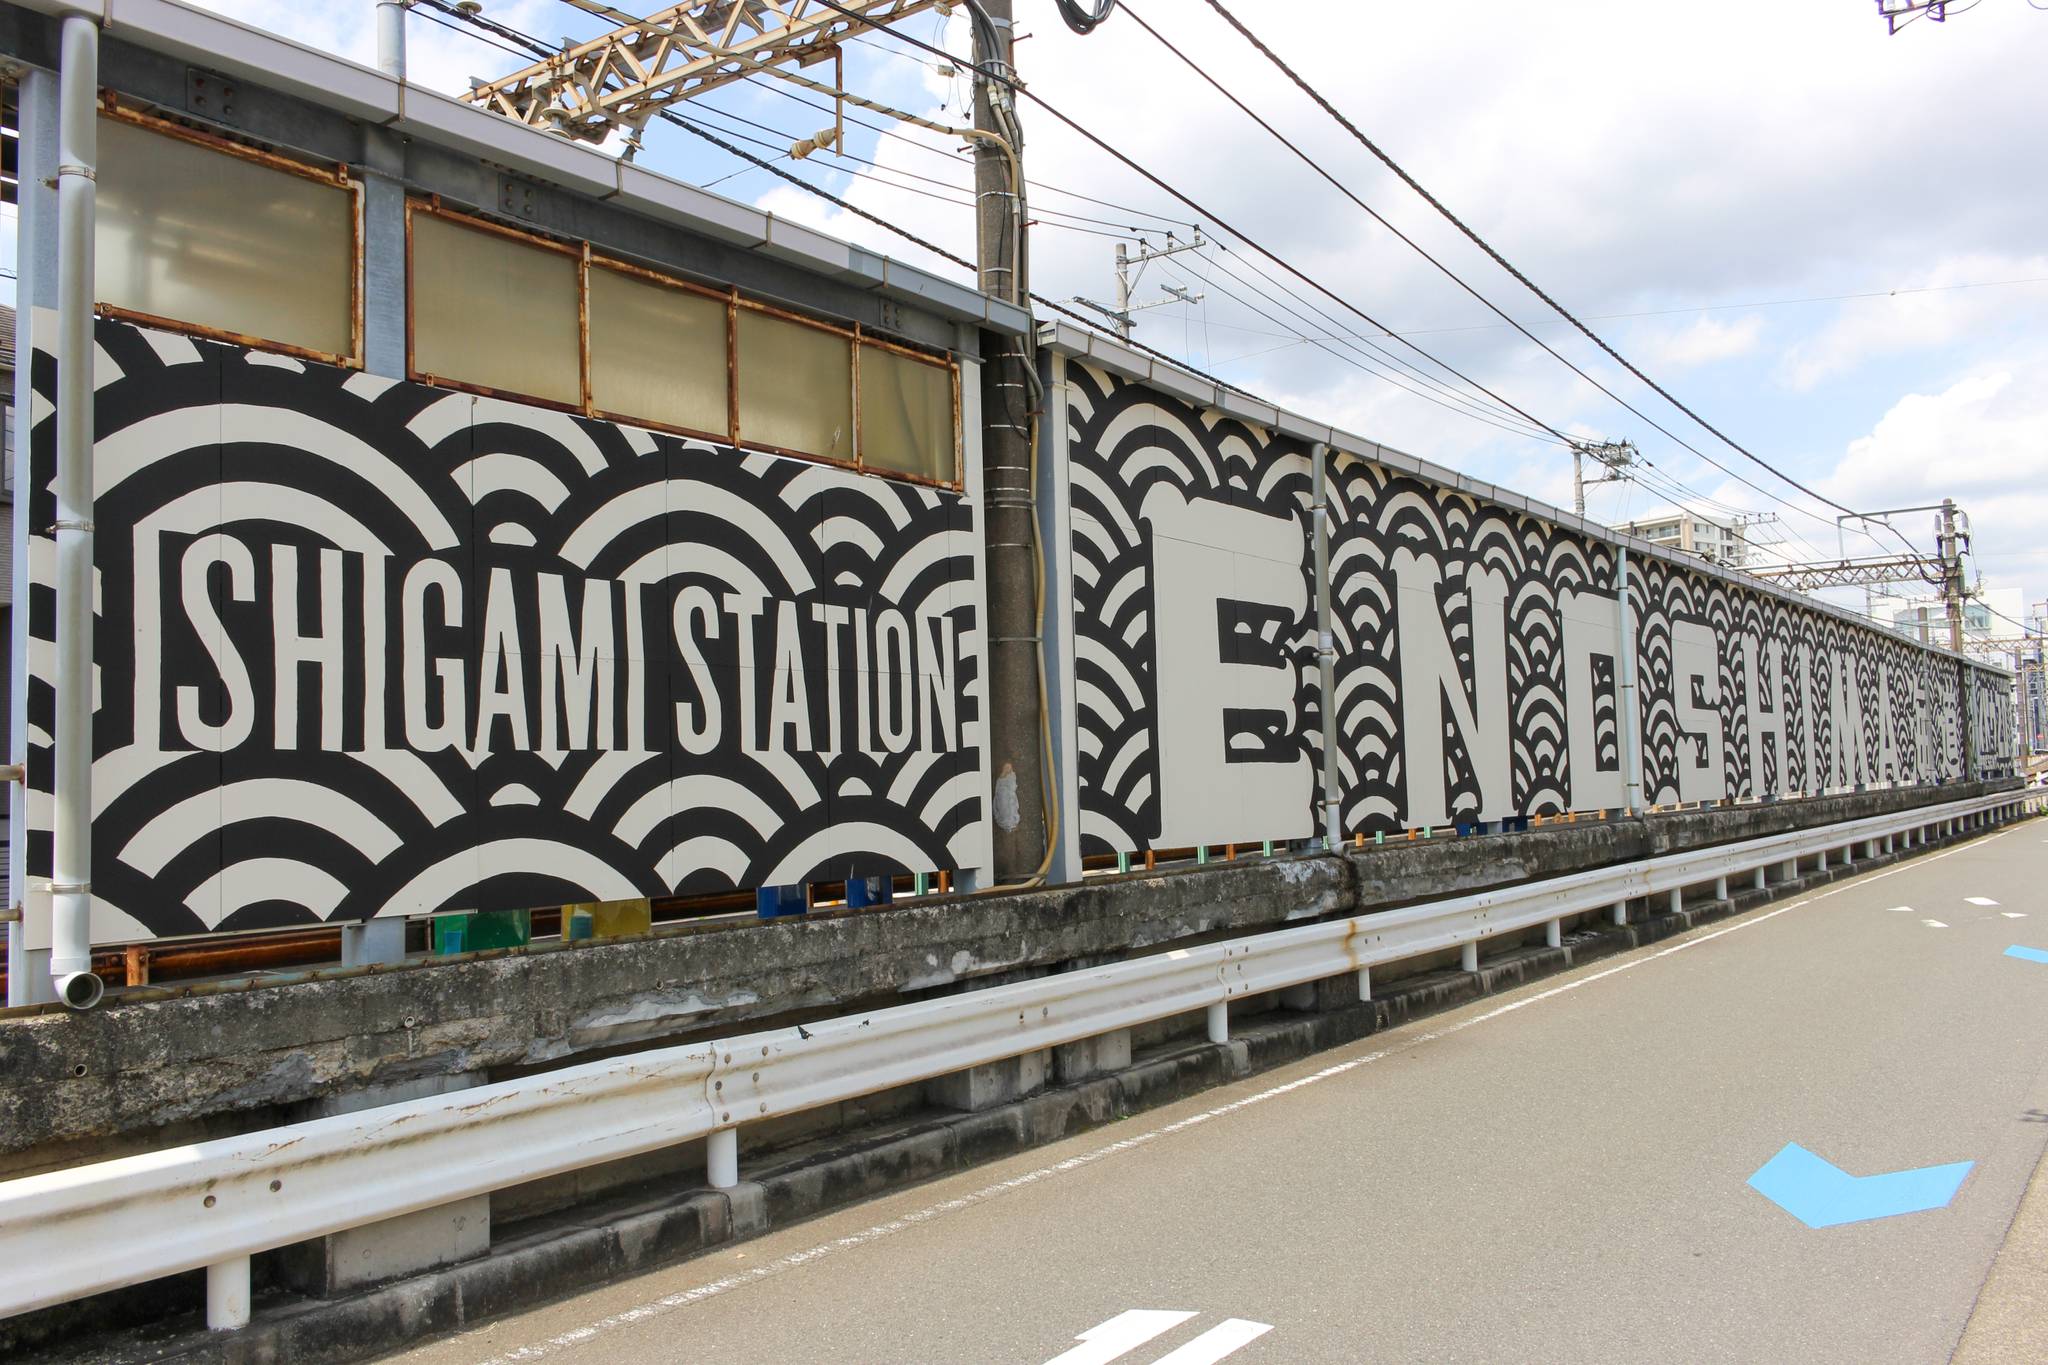 Eastside Transition&mdash;Ishigami train station Enoden - 02